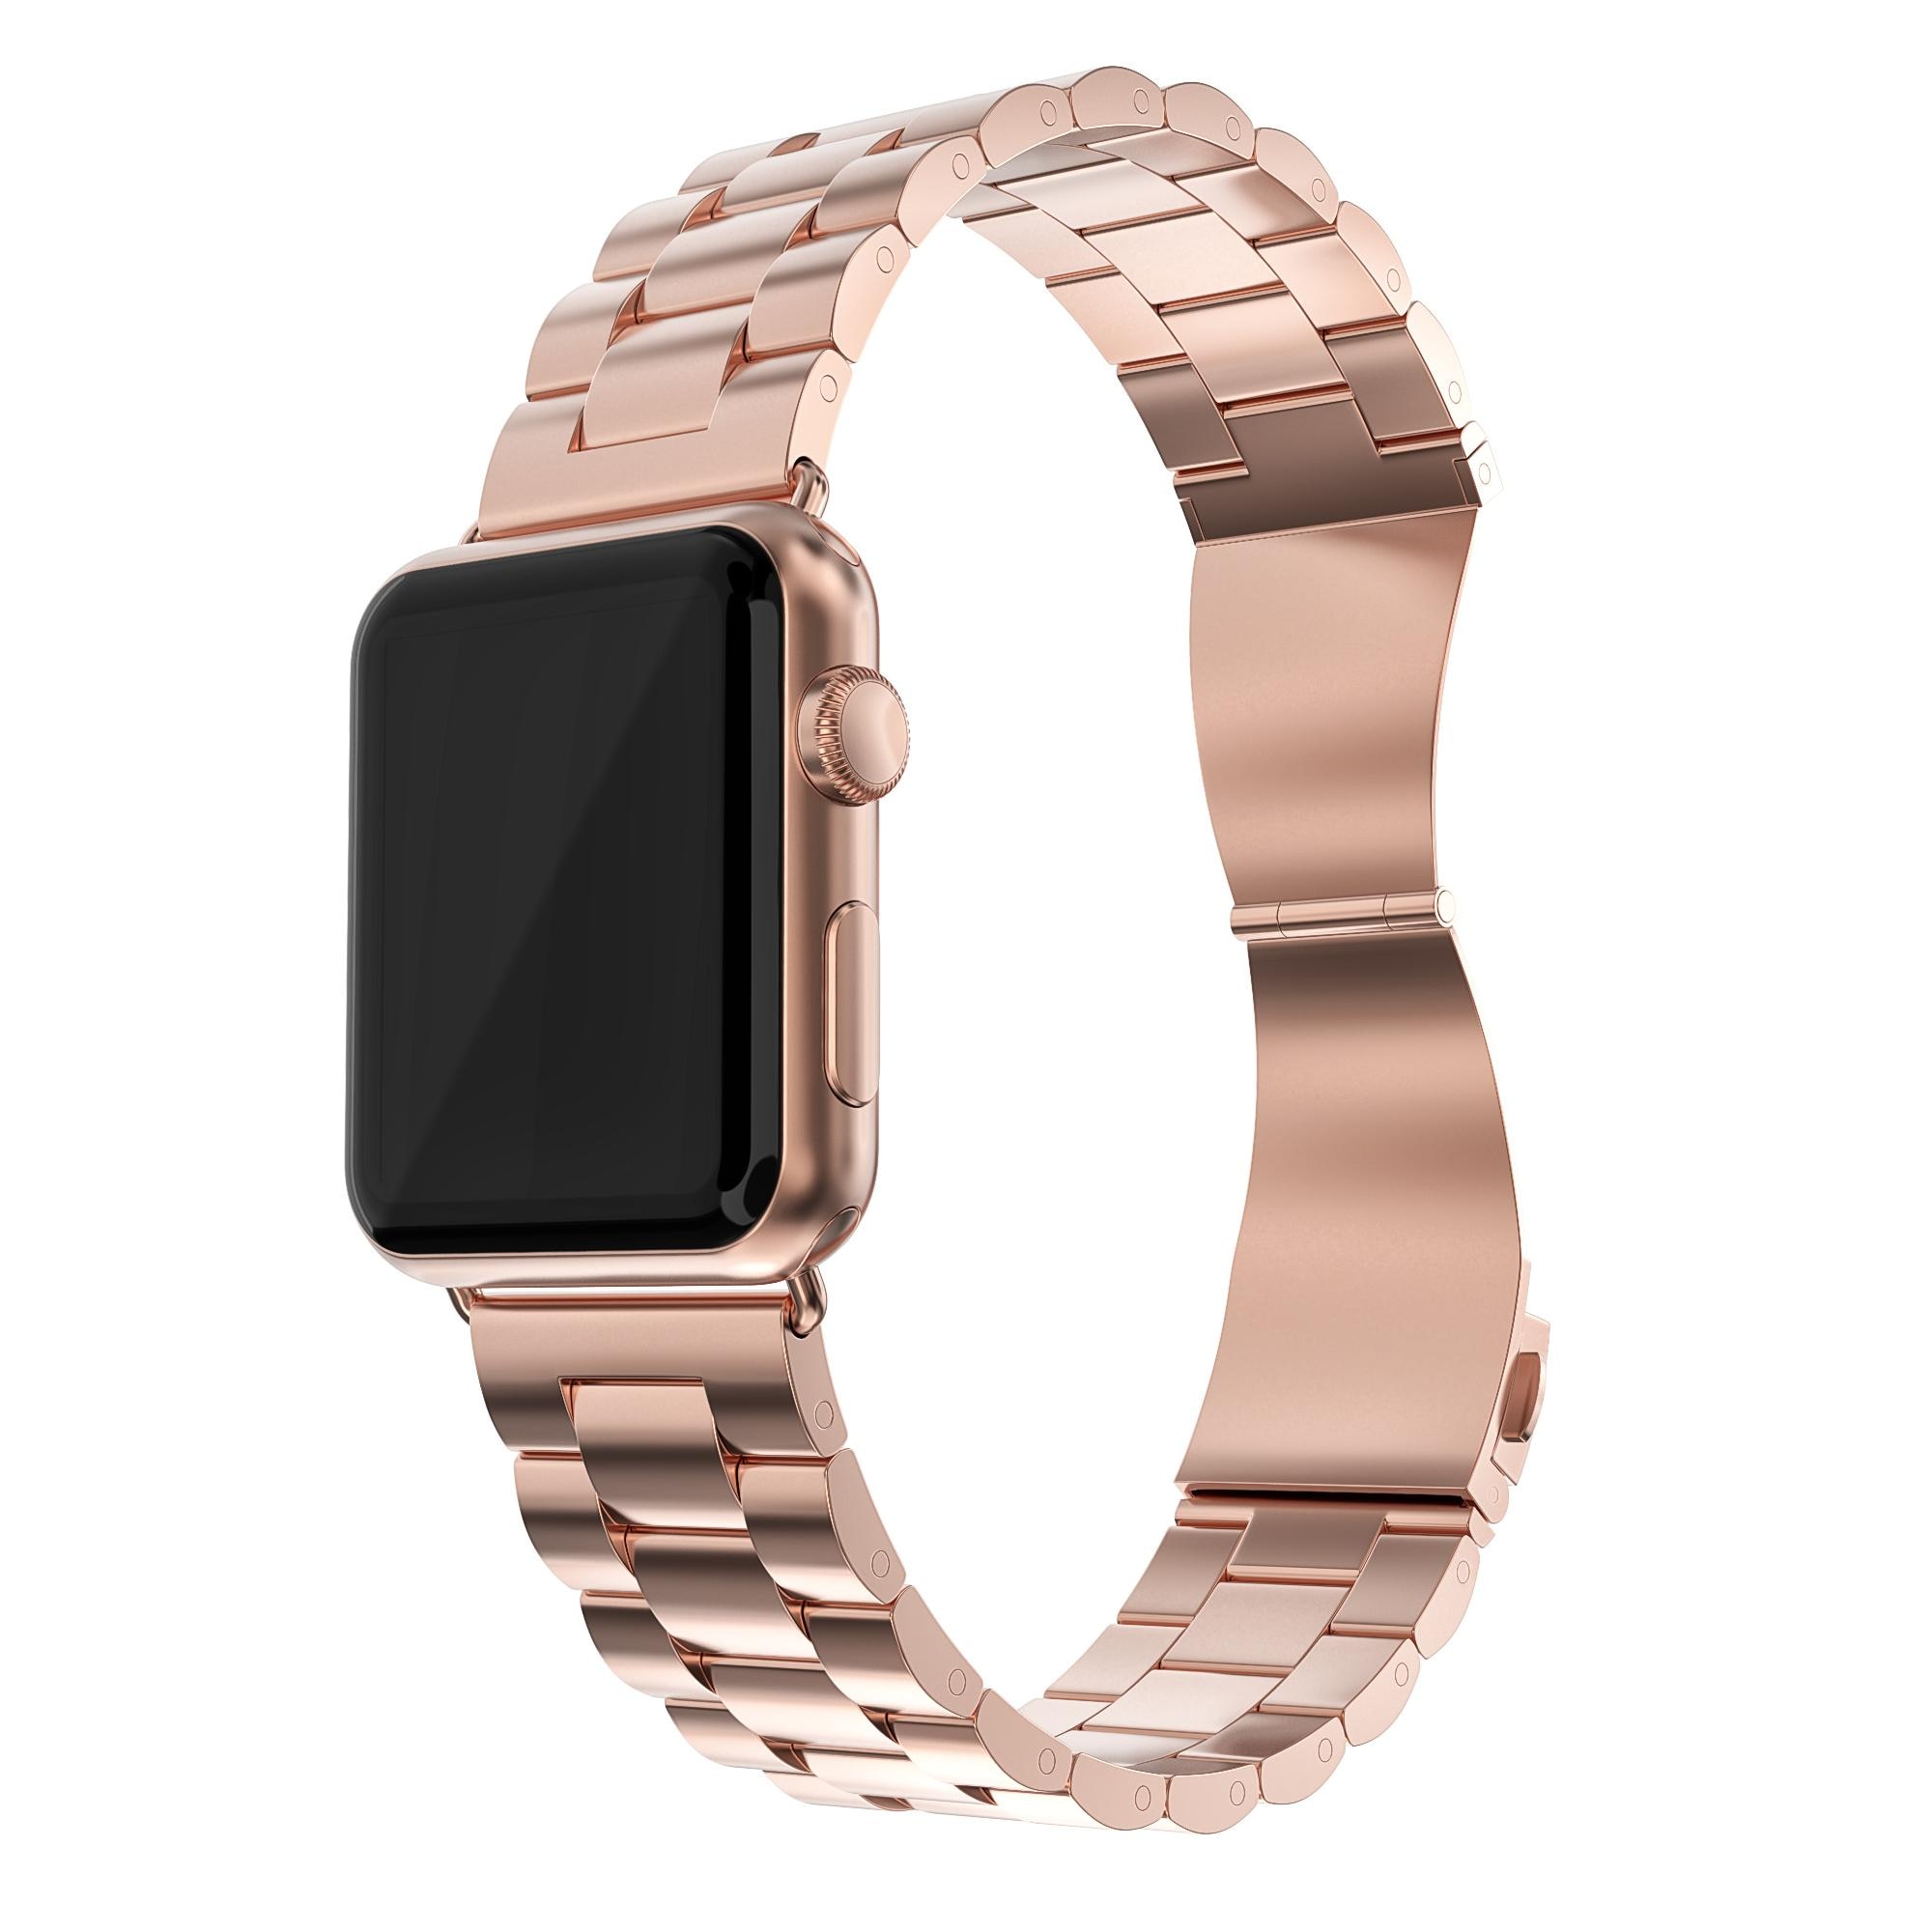 Metalarmbånd Apple Watch 40mm rose guld